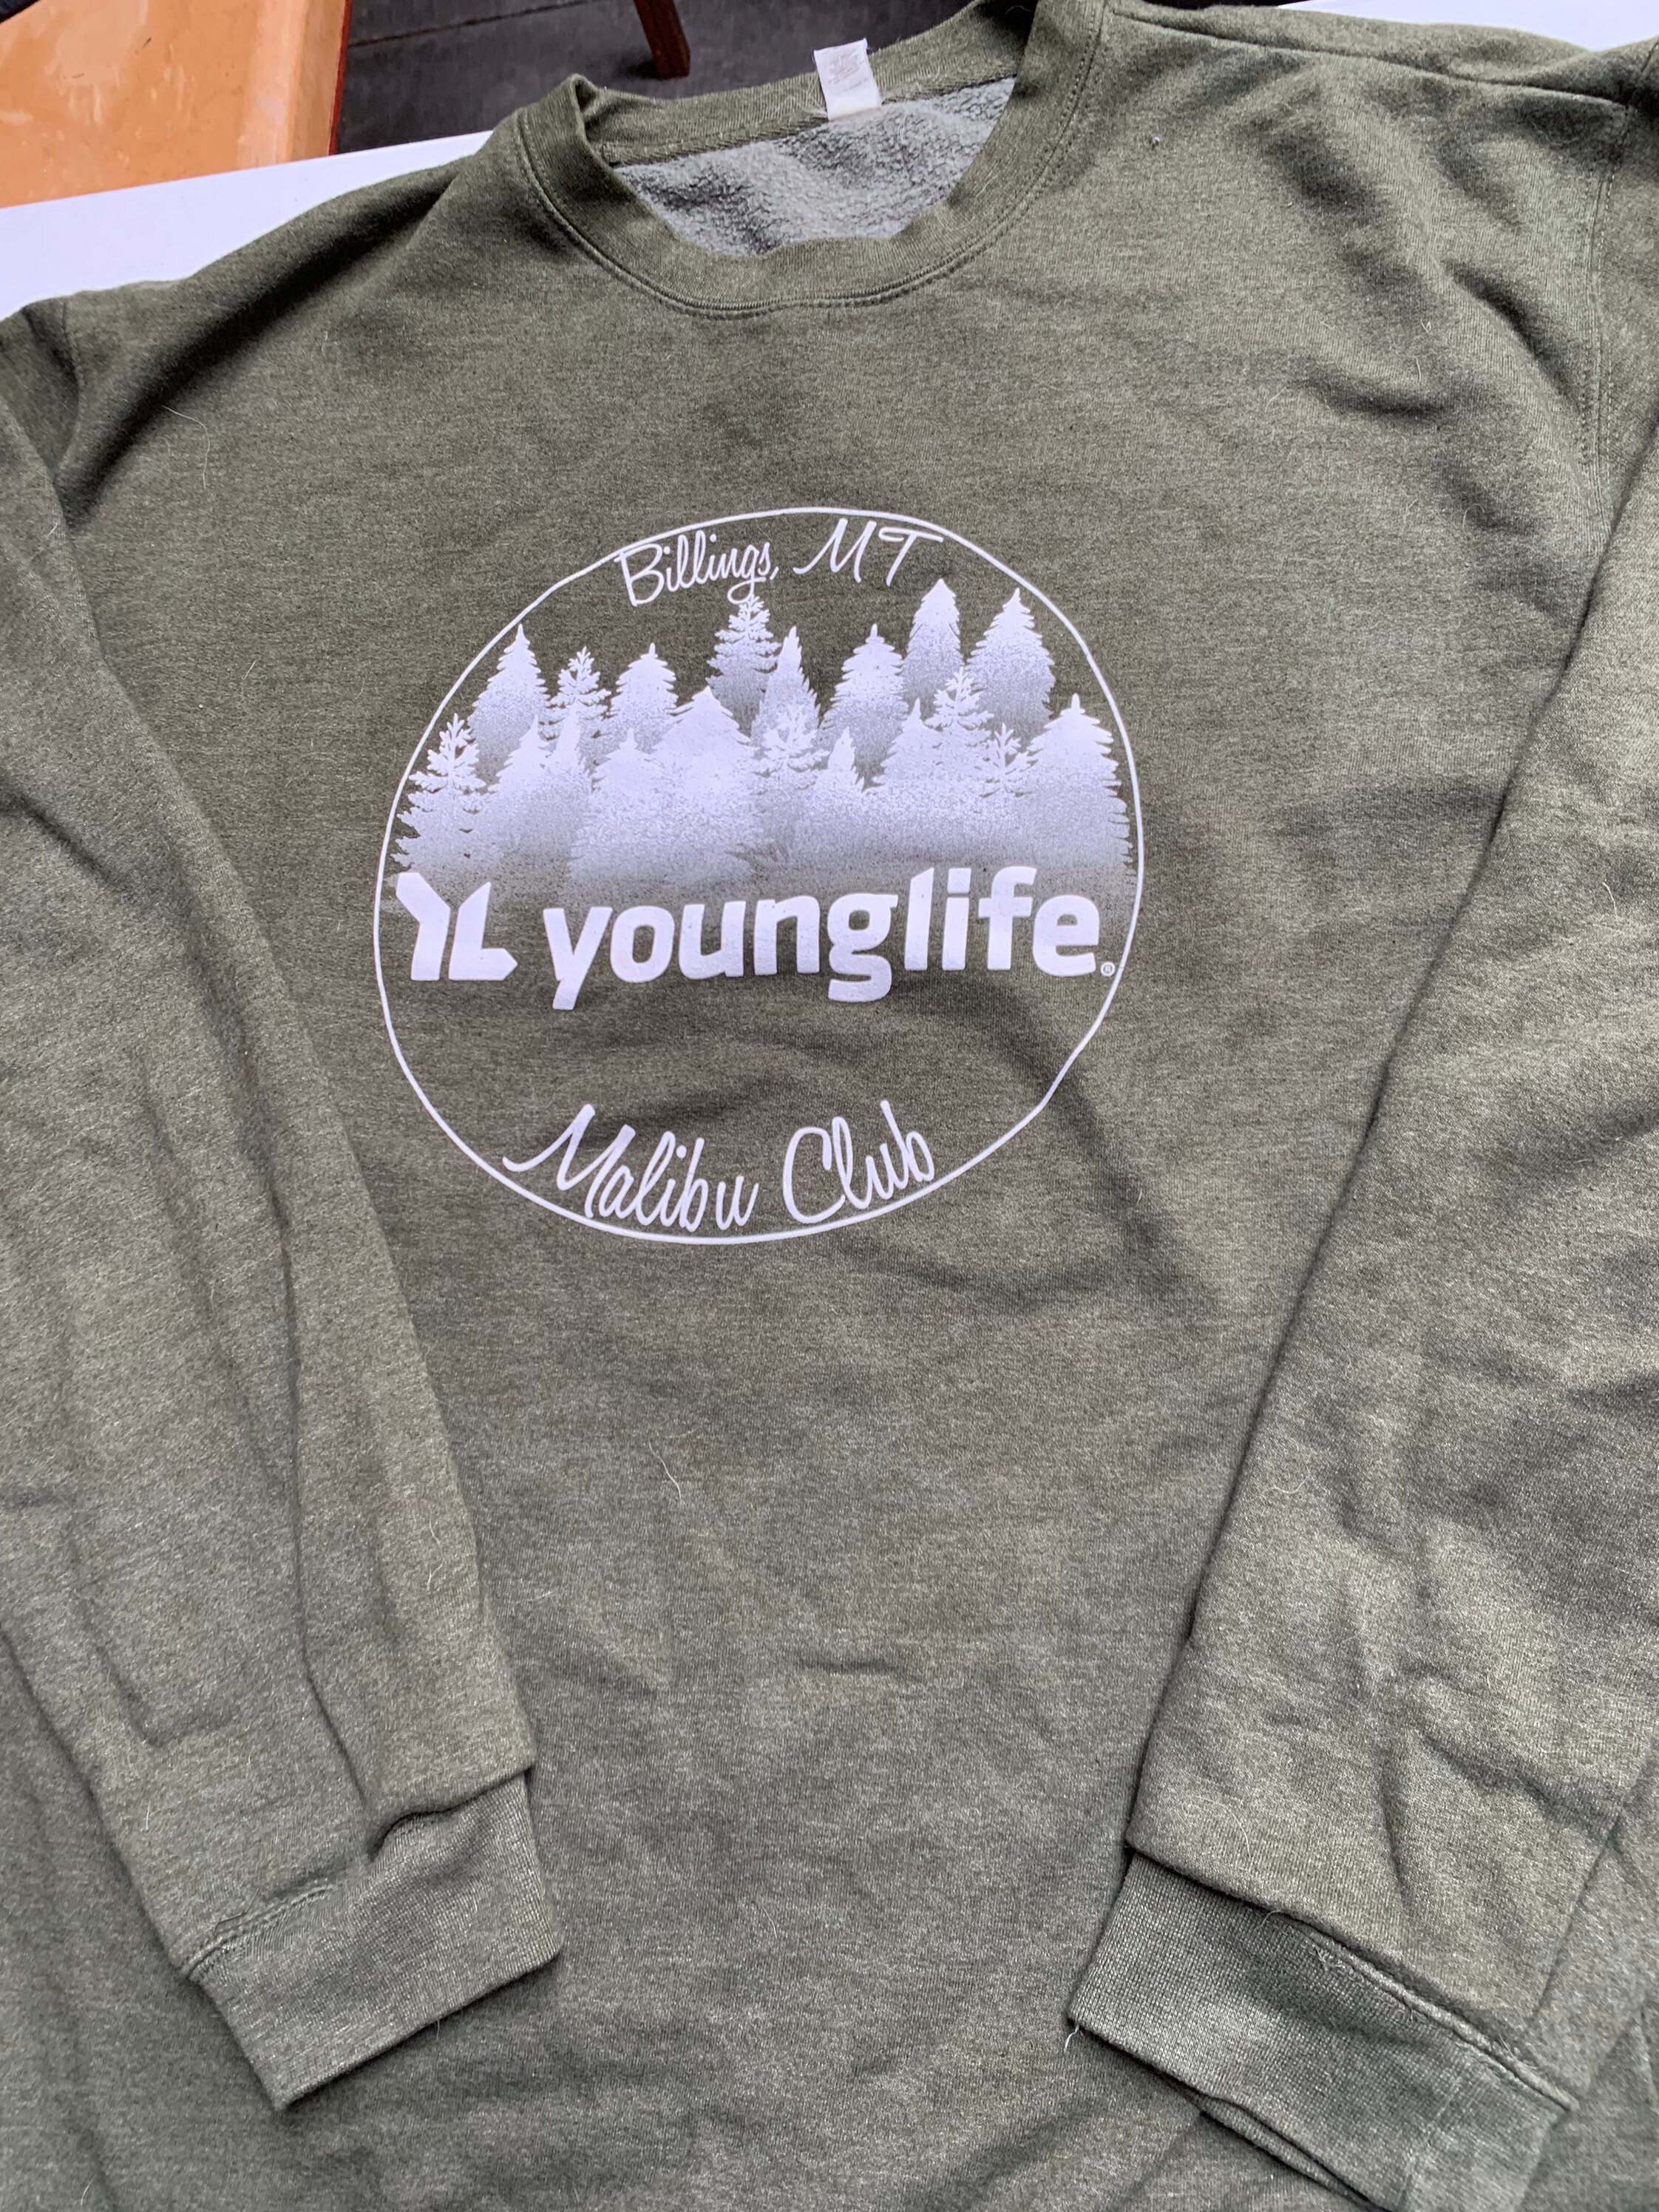 Billings Montana Malibu Club Young Life Crewneck Sweatshirt Size 2XL Heather Green Color